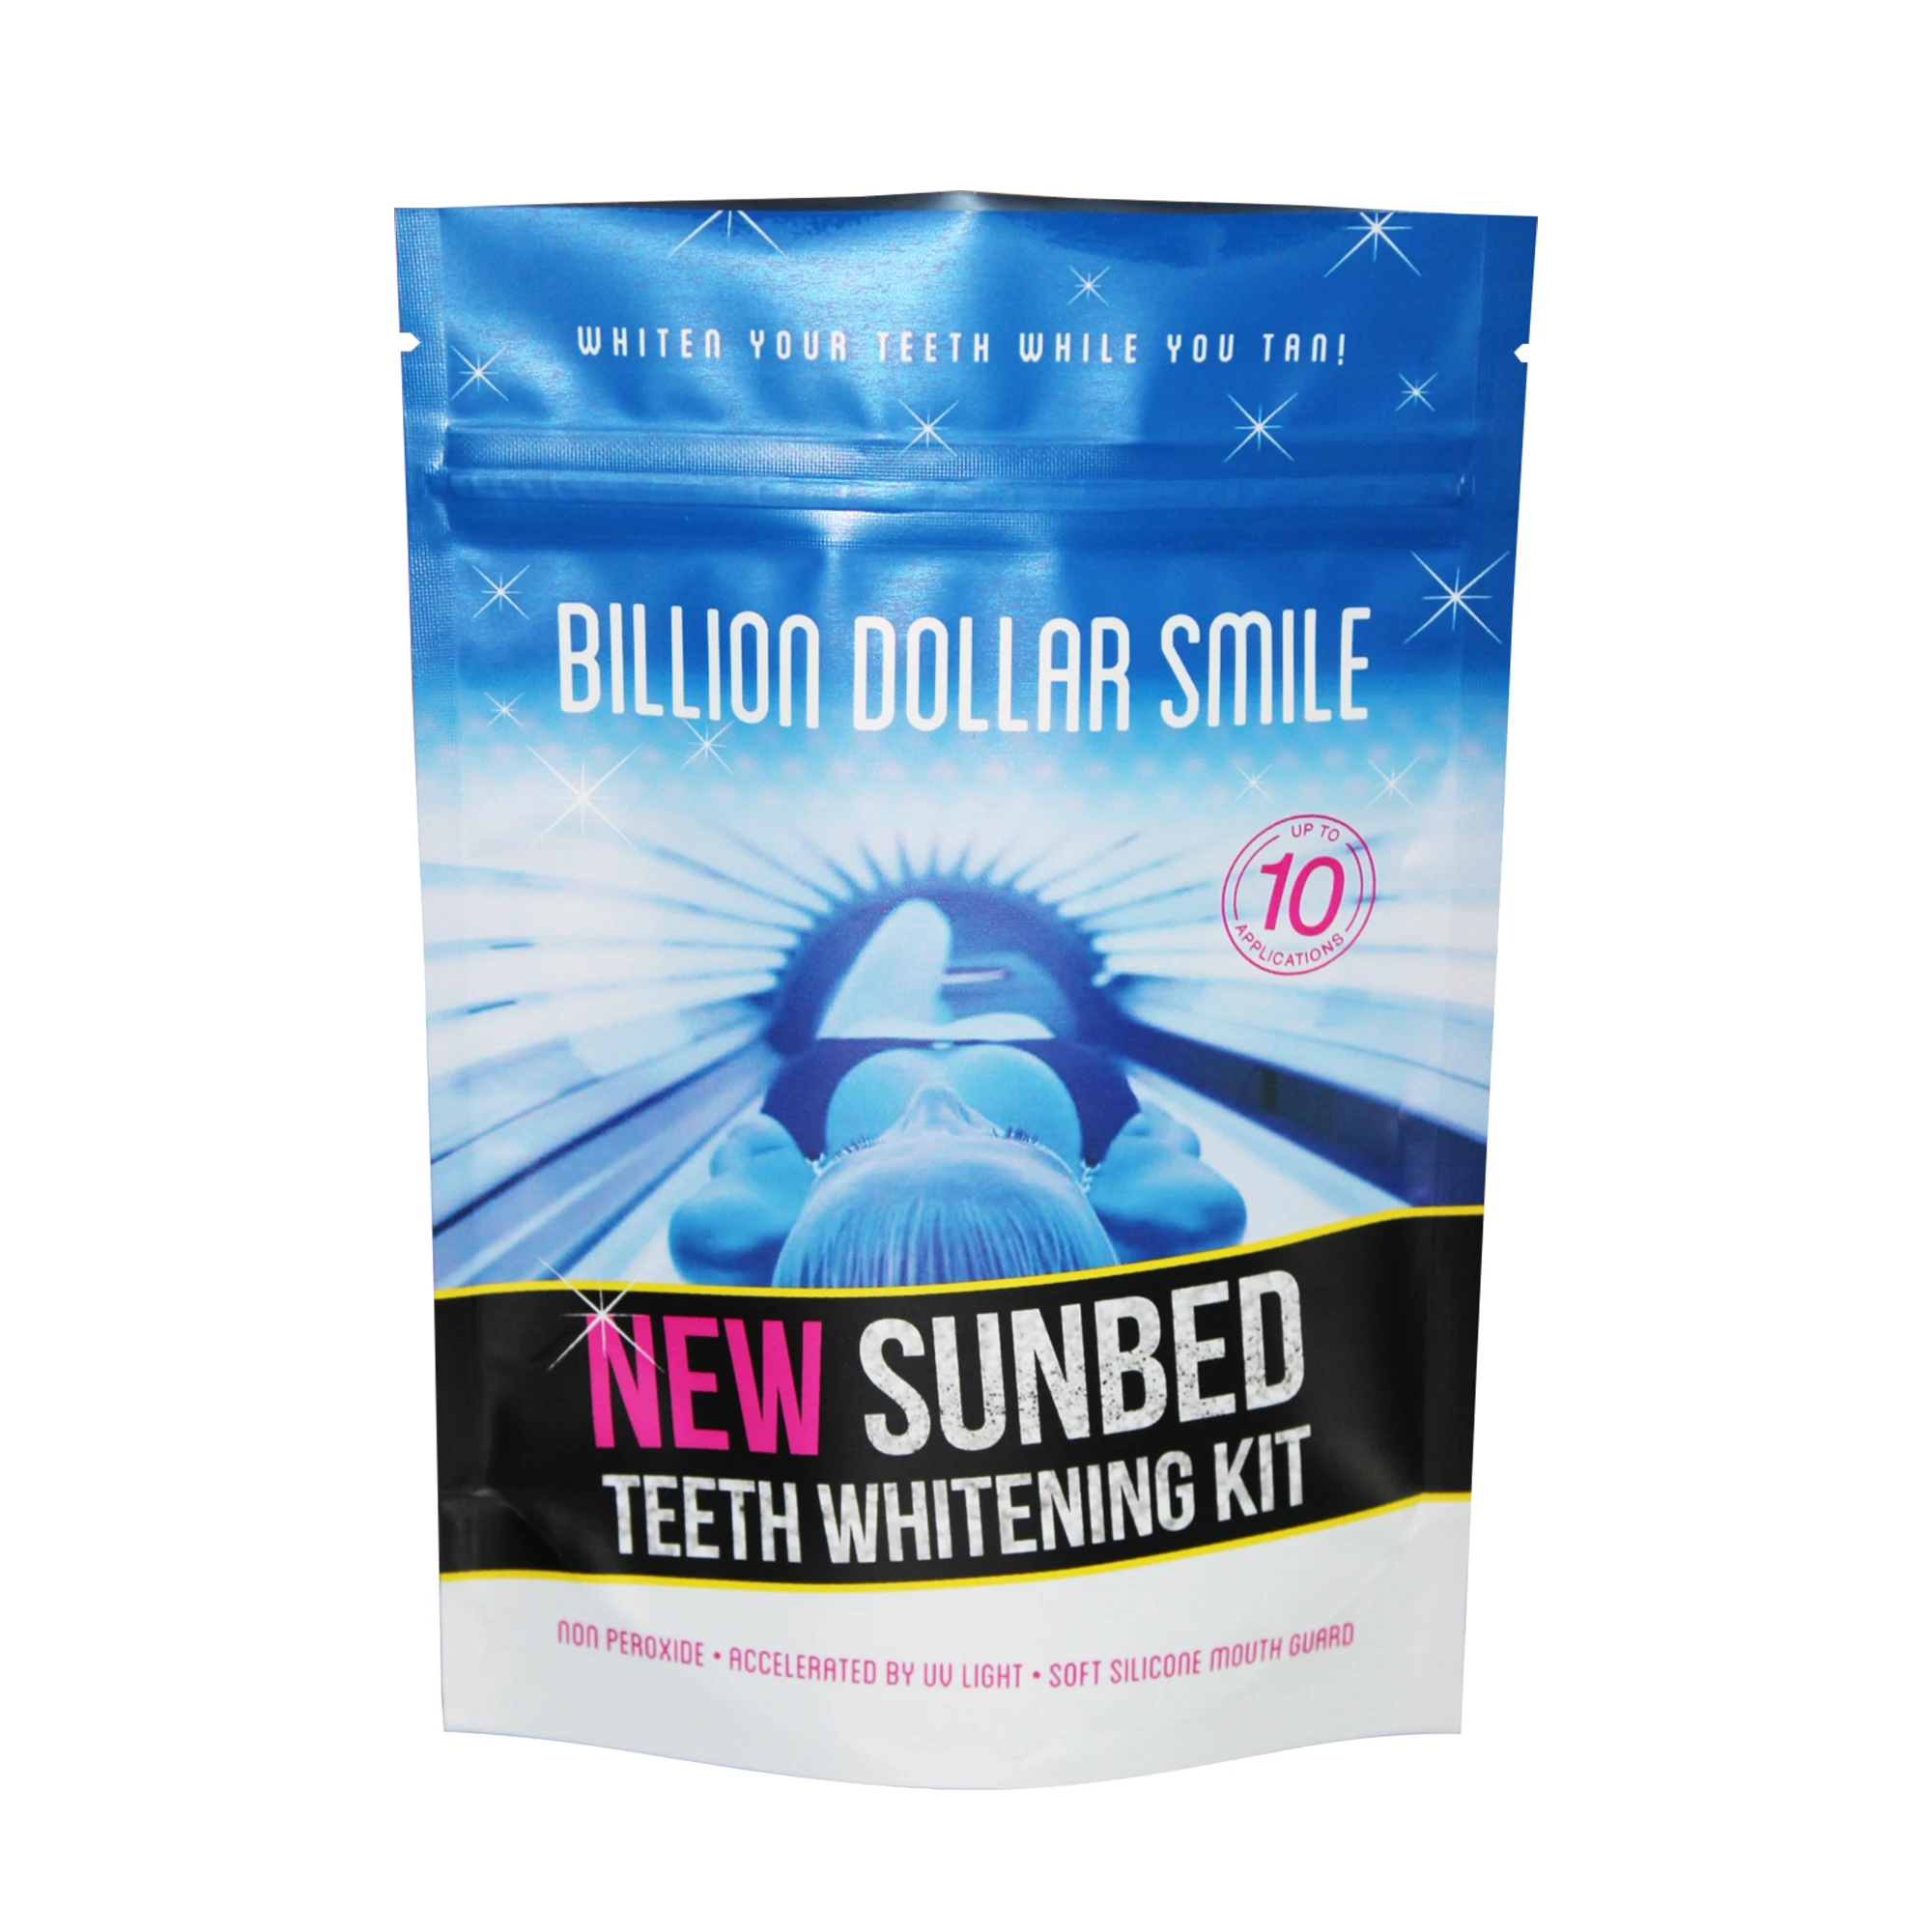 teeth whitening kits use sunbeds